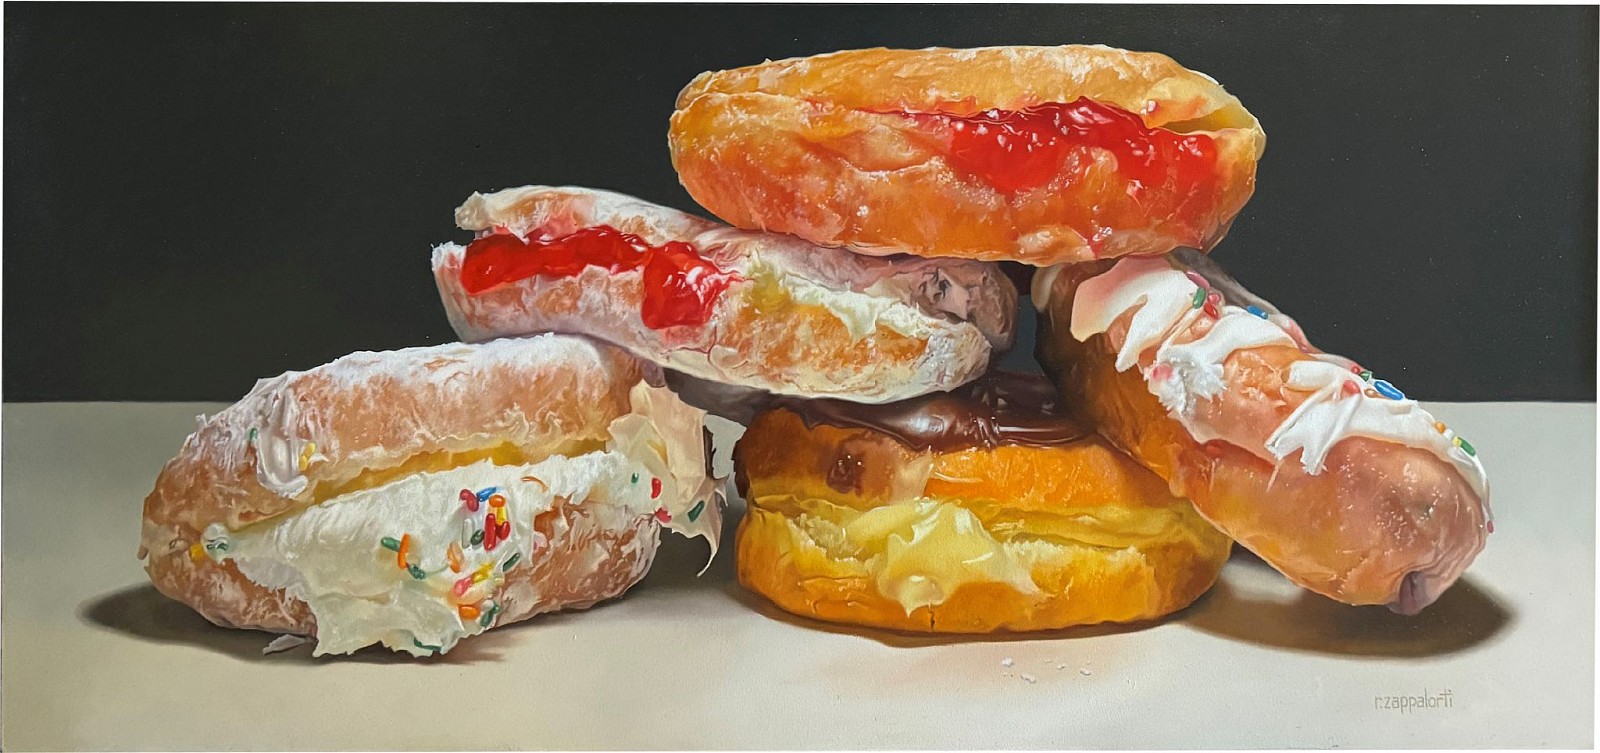 Robert E. Zappalorti, Donut Tempt Me, 2023
oil on panel, 11 x 23 1/2 in. (27.9 x 59.7 cm)
RZ231101